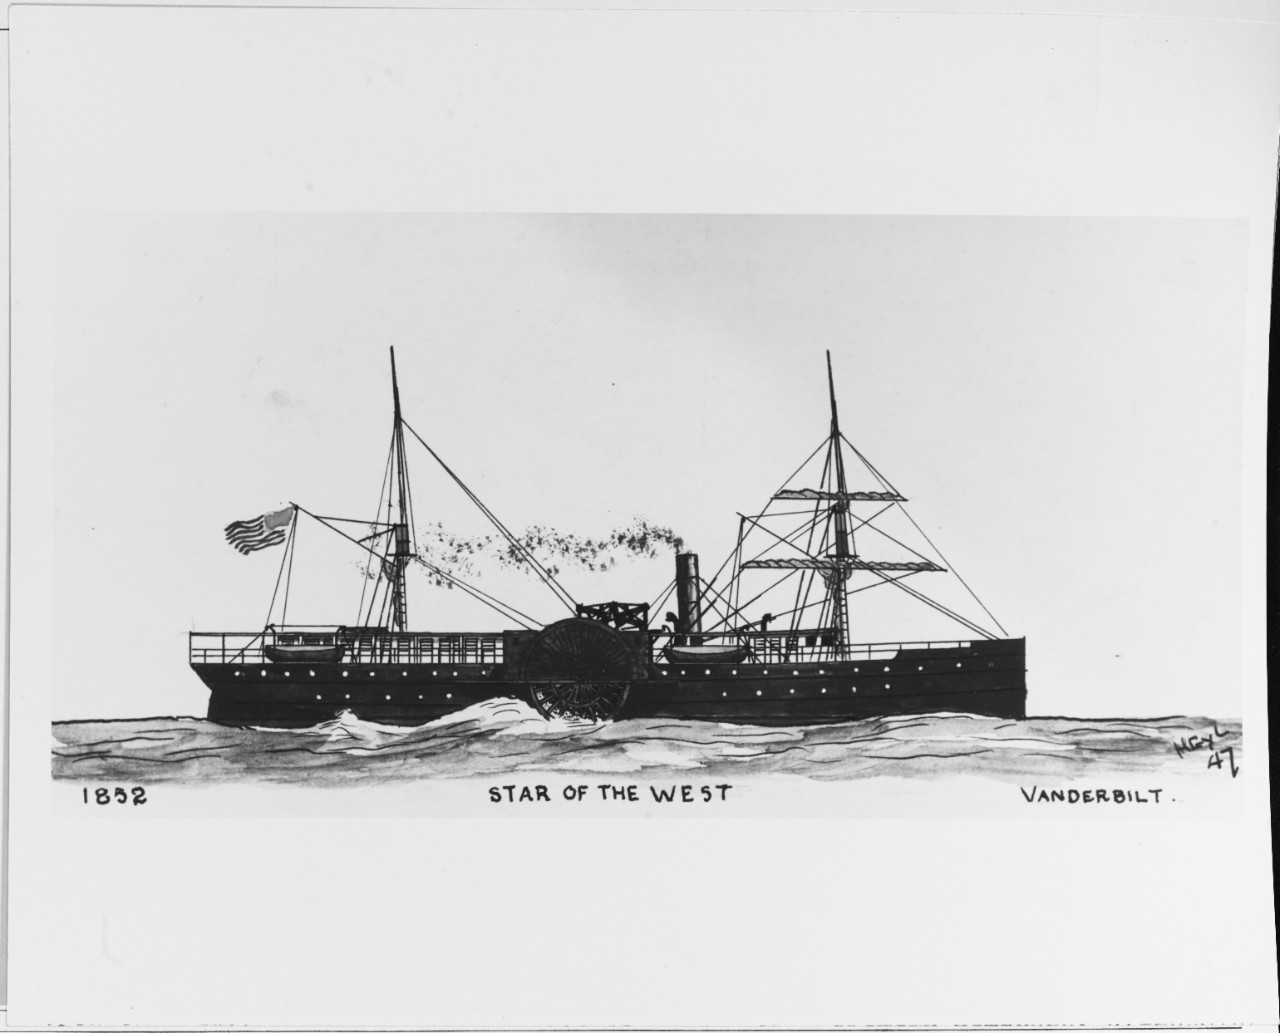 STAR OF THE WEST (merchant steamer, 1852-1862)